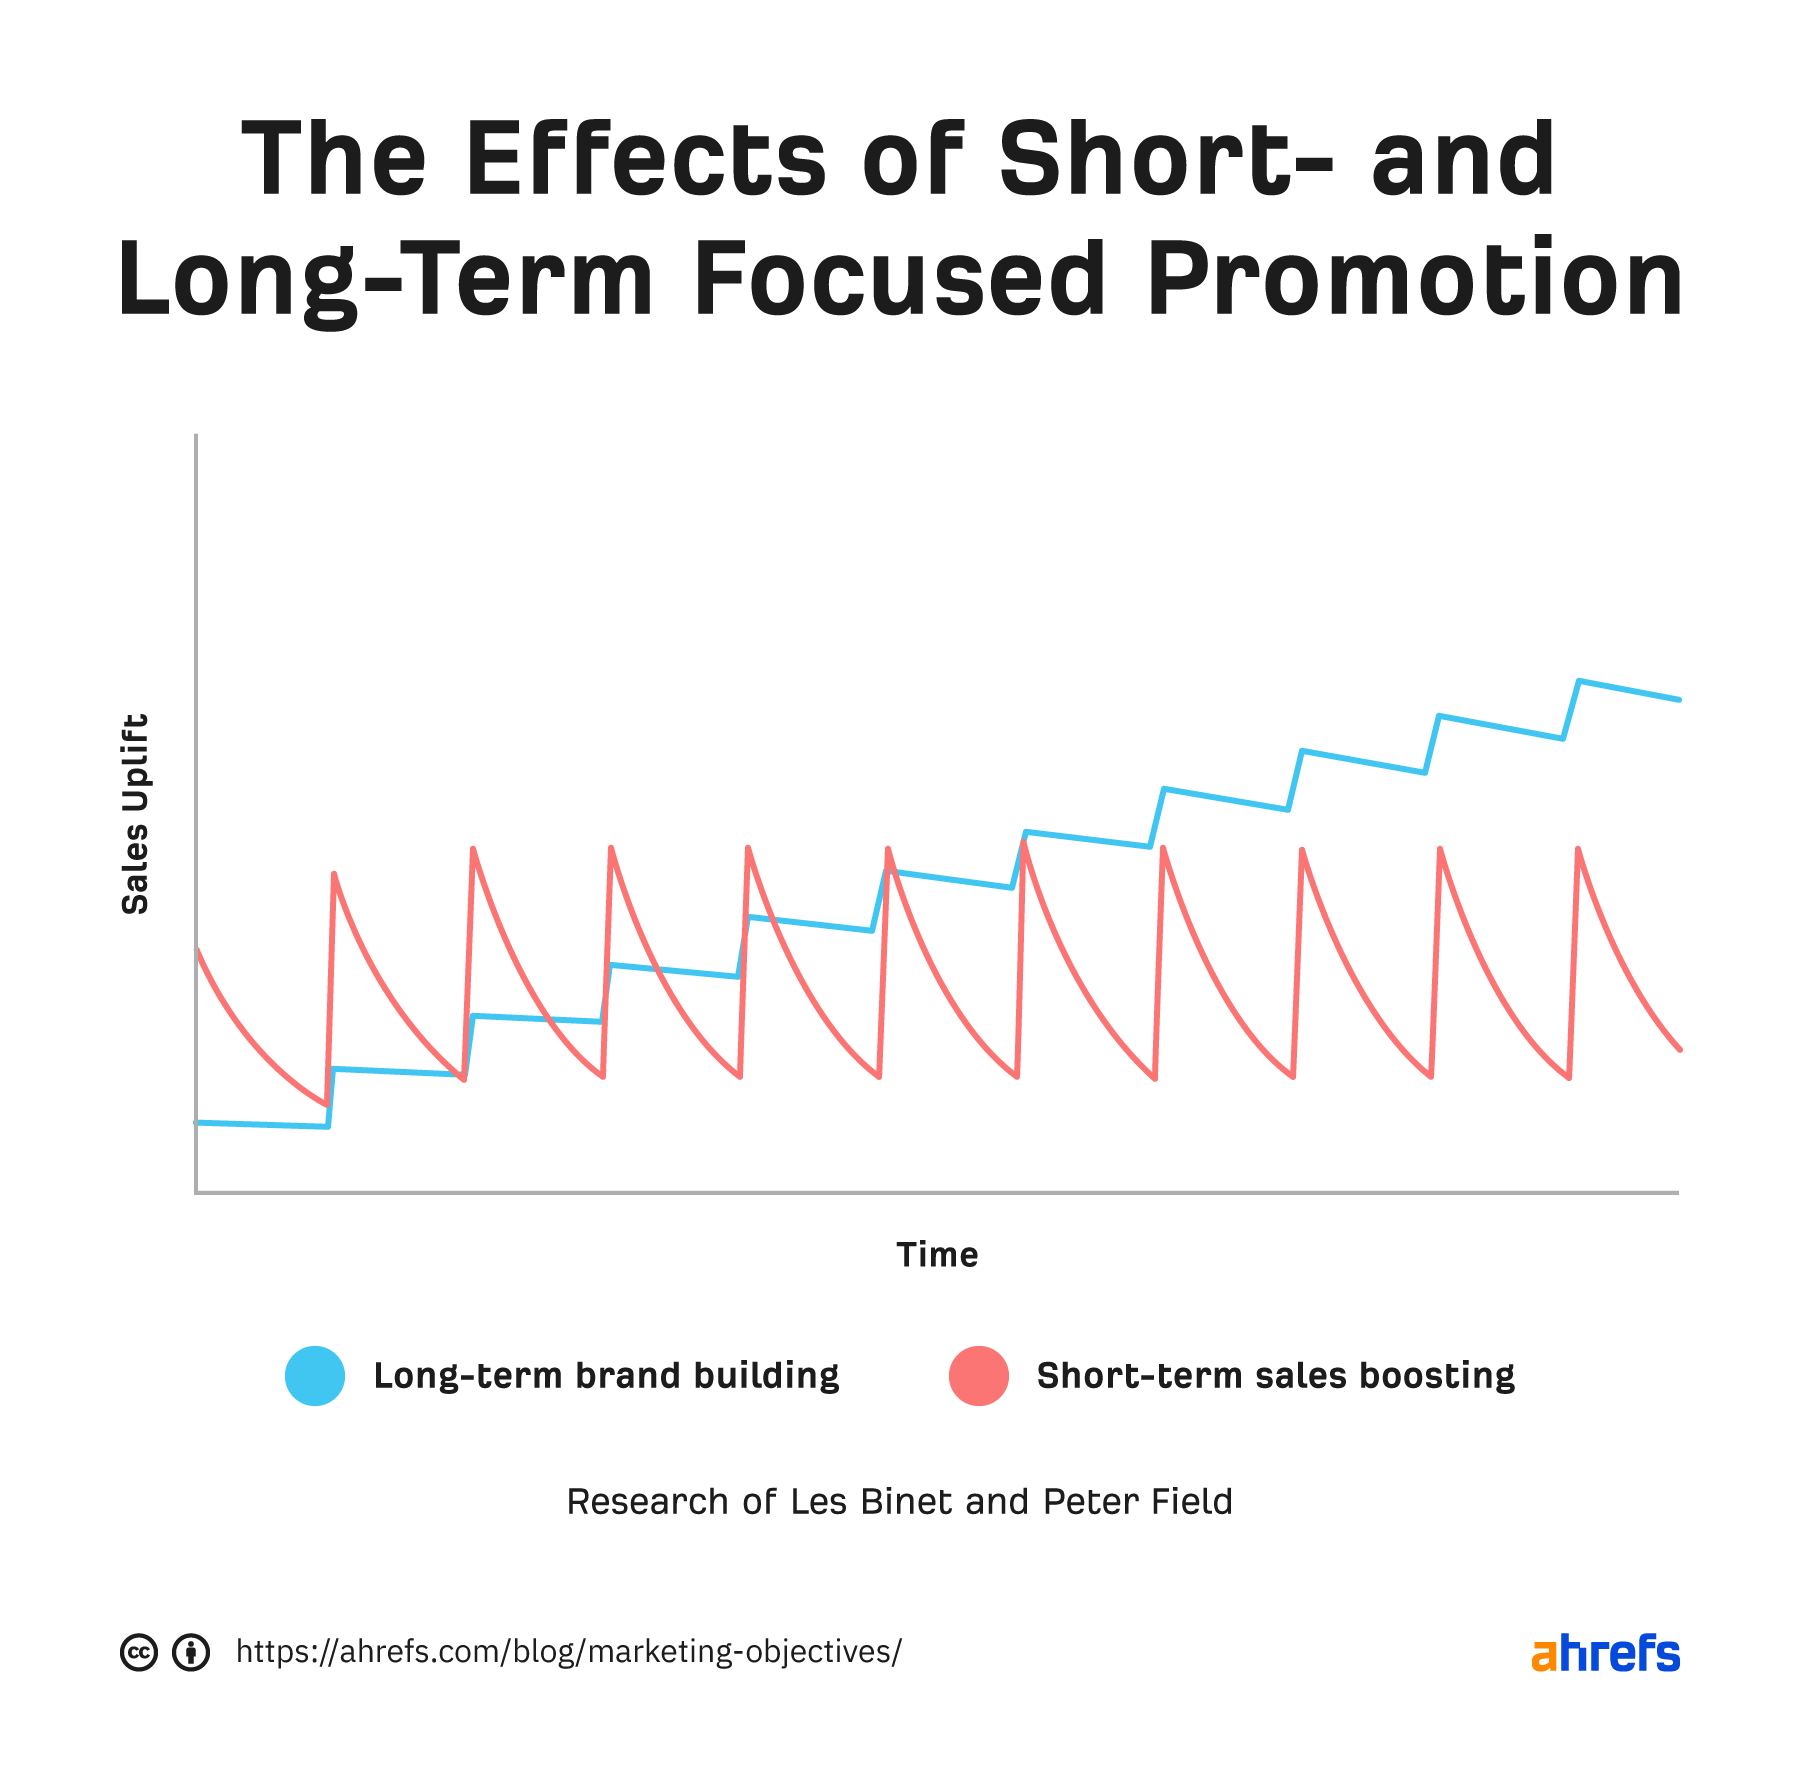 Short- vs. long-term focused promotion